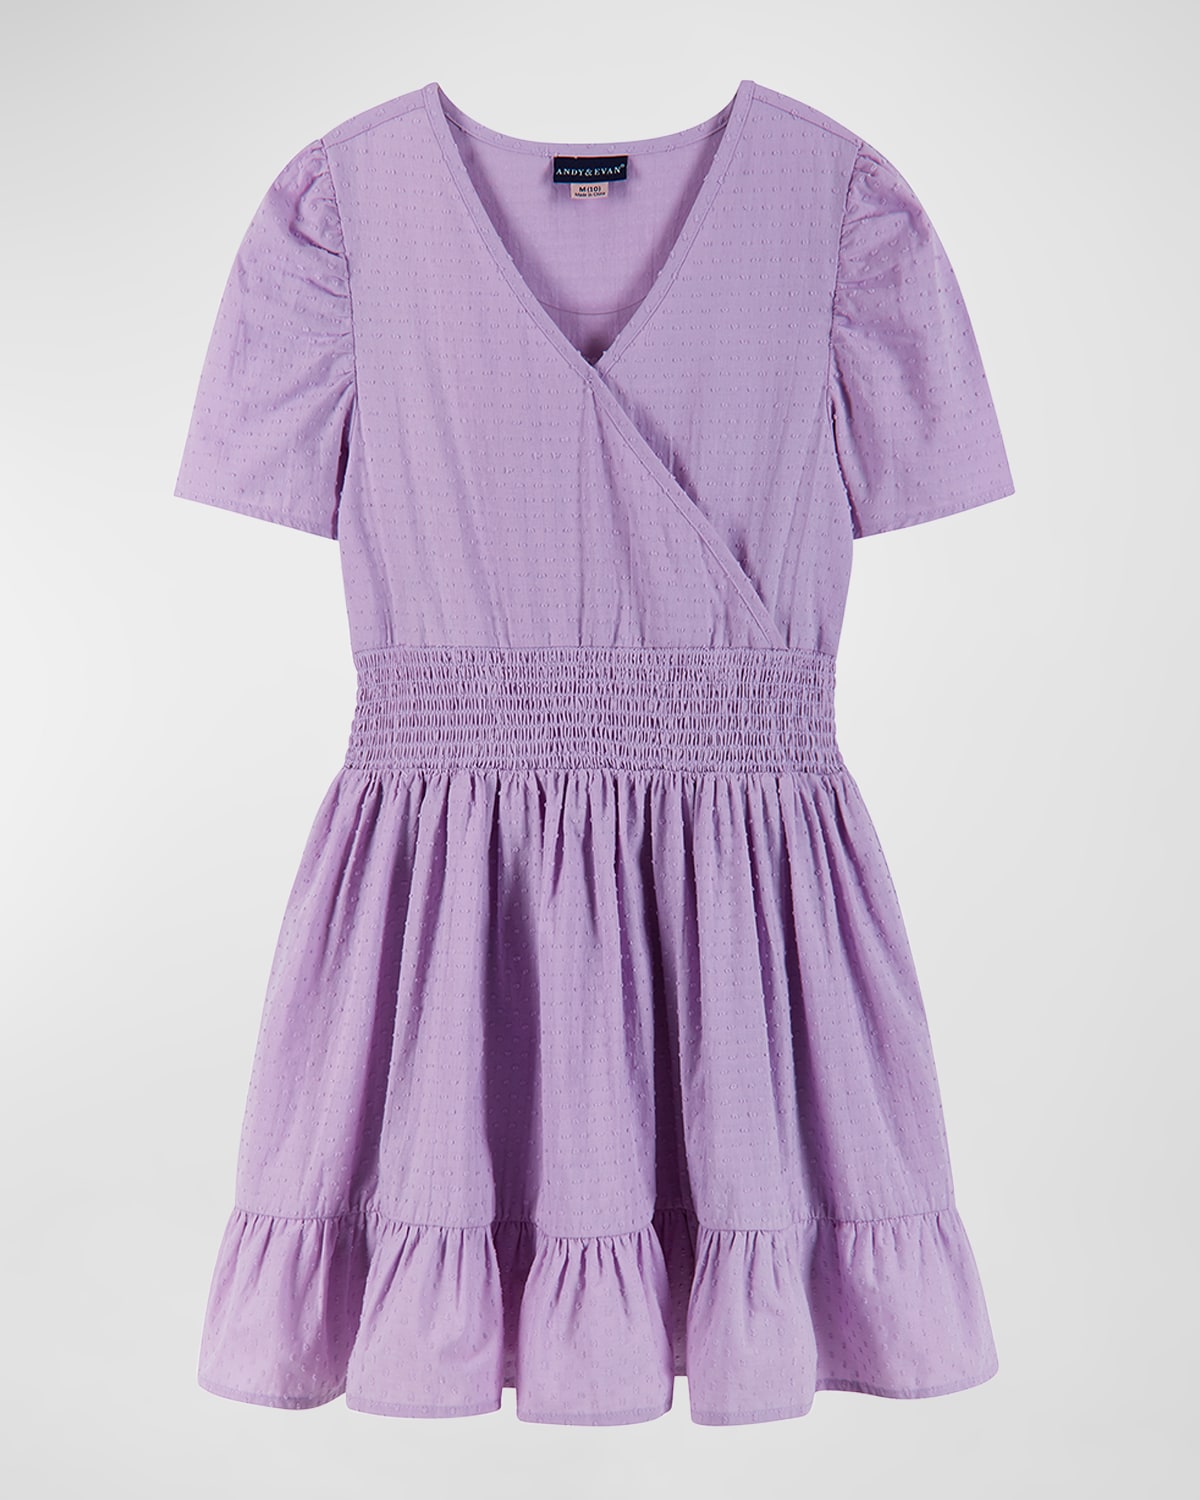 Andy & Evan Kids' Girl's Smocked Surplice Dress In Purple